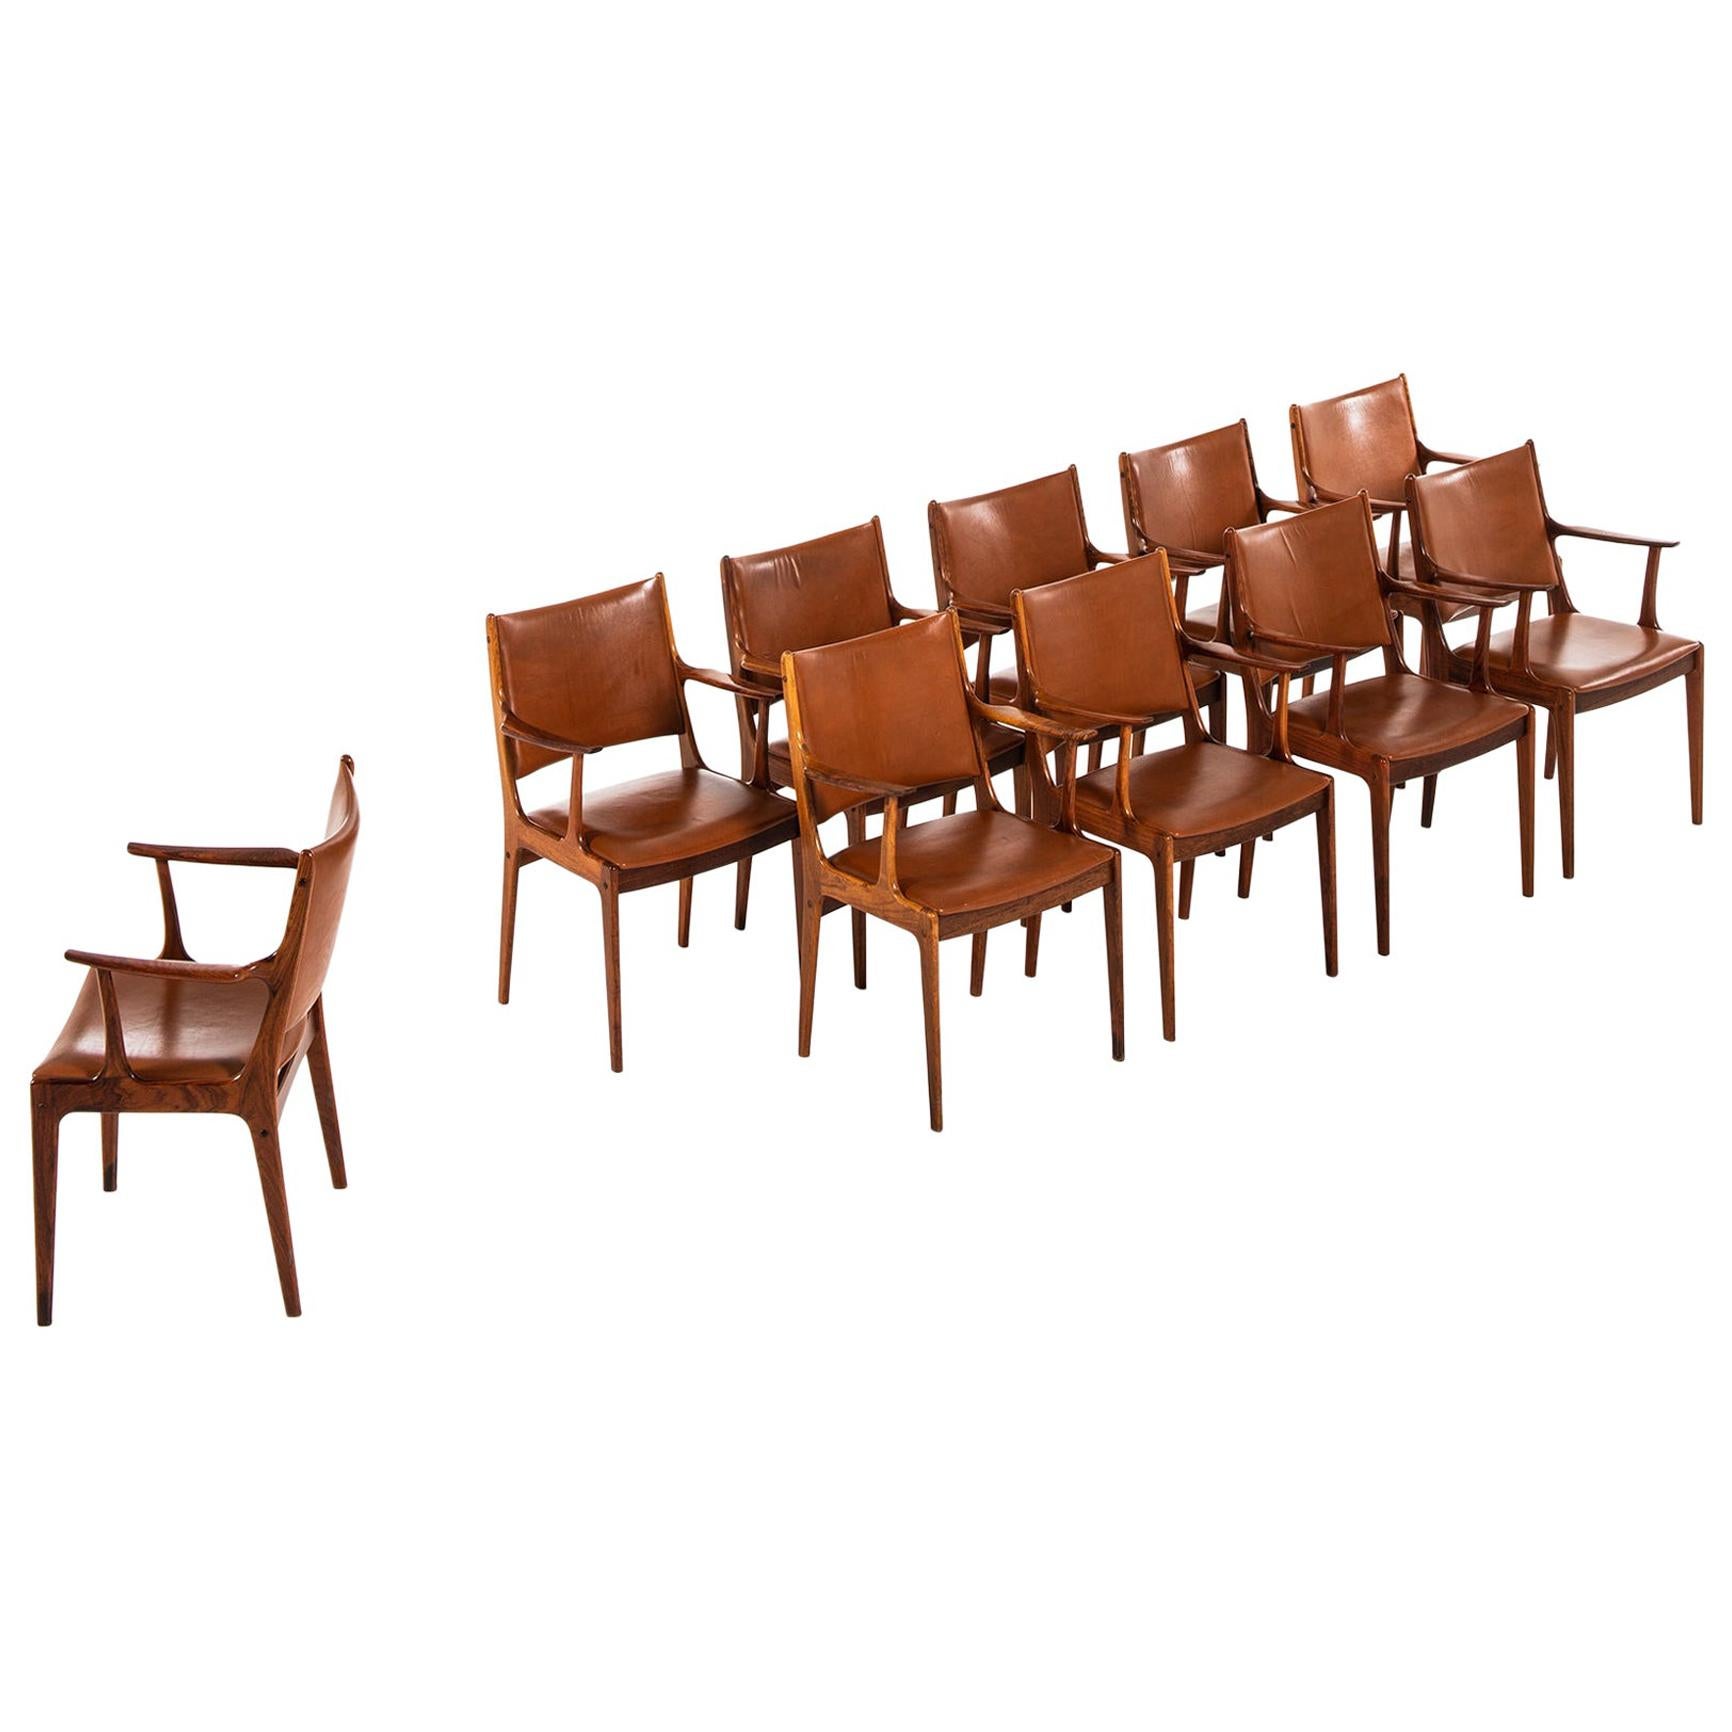 Johannes Andersen Dining Chairs / Armchairs by Uldum Møbelfabrik in Denmark